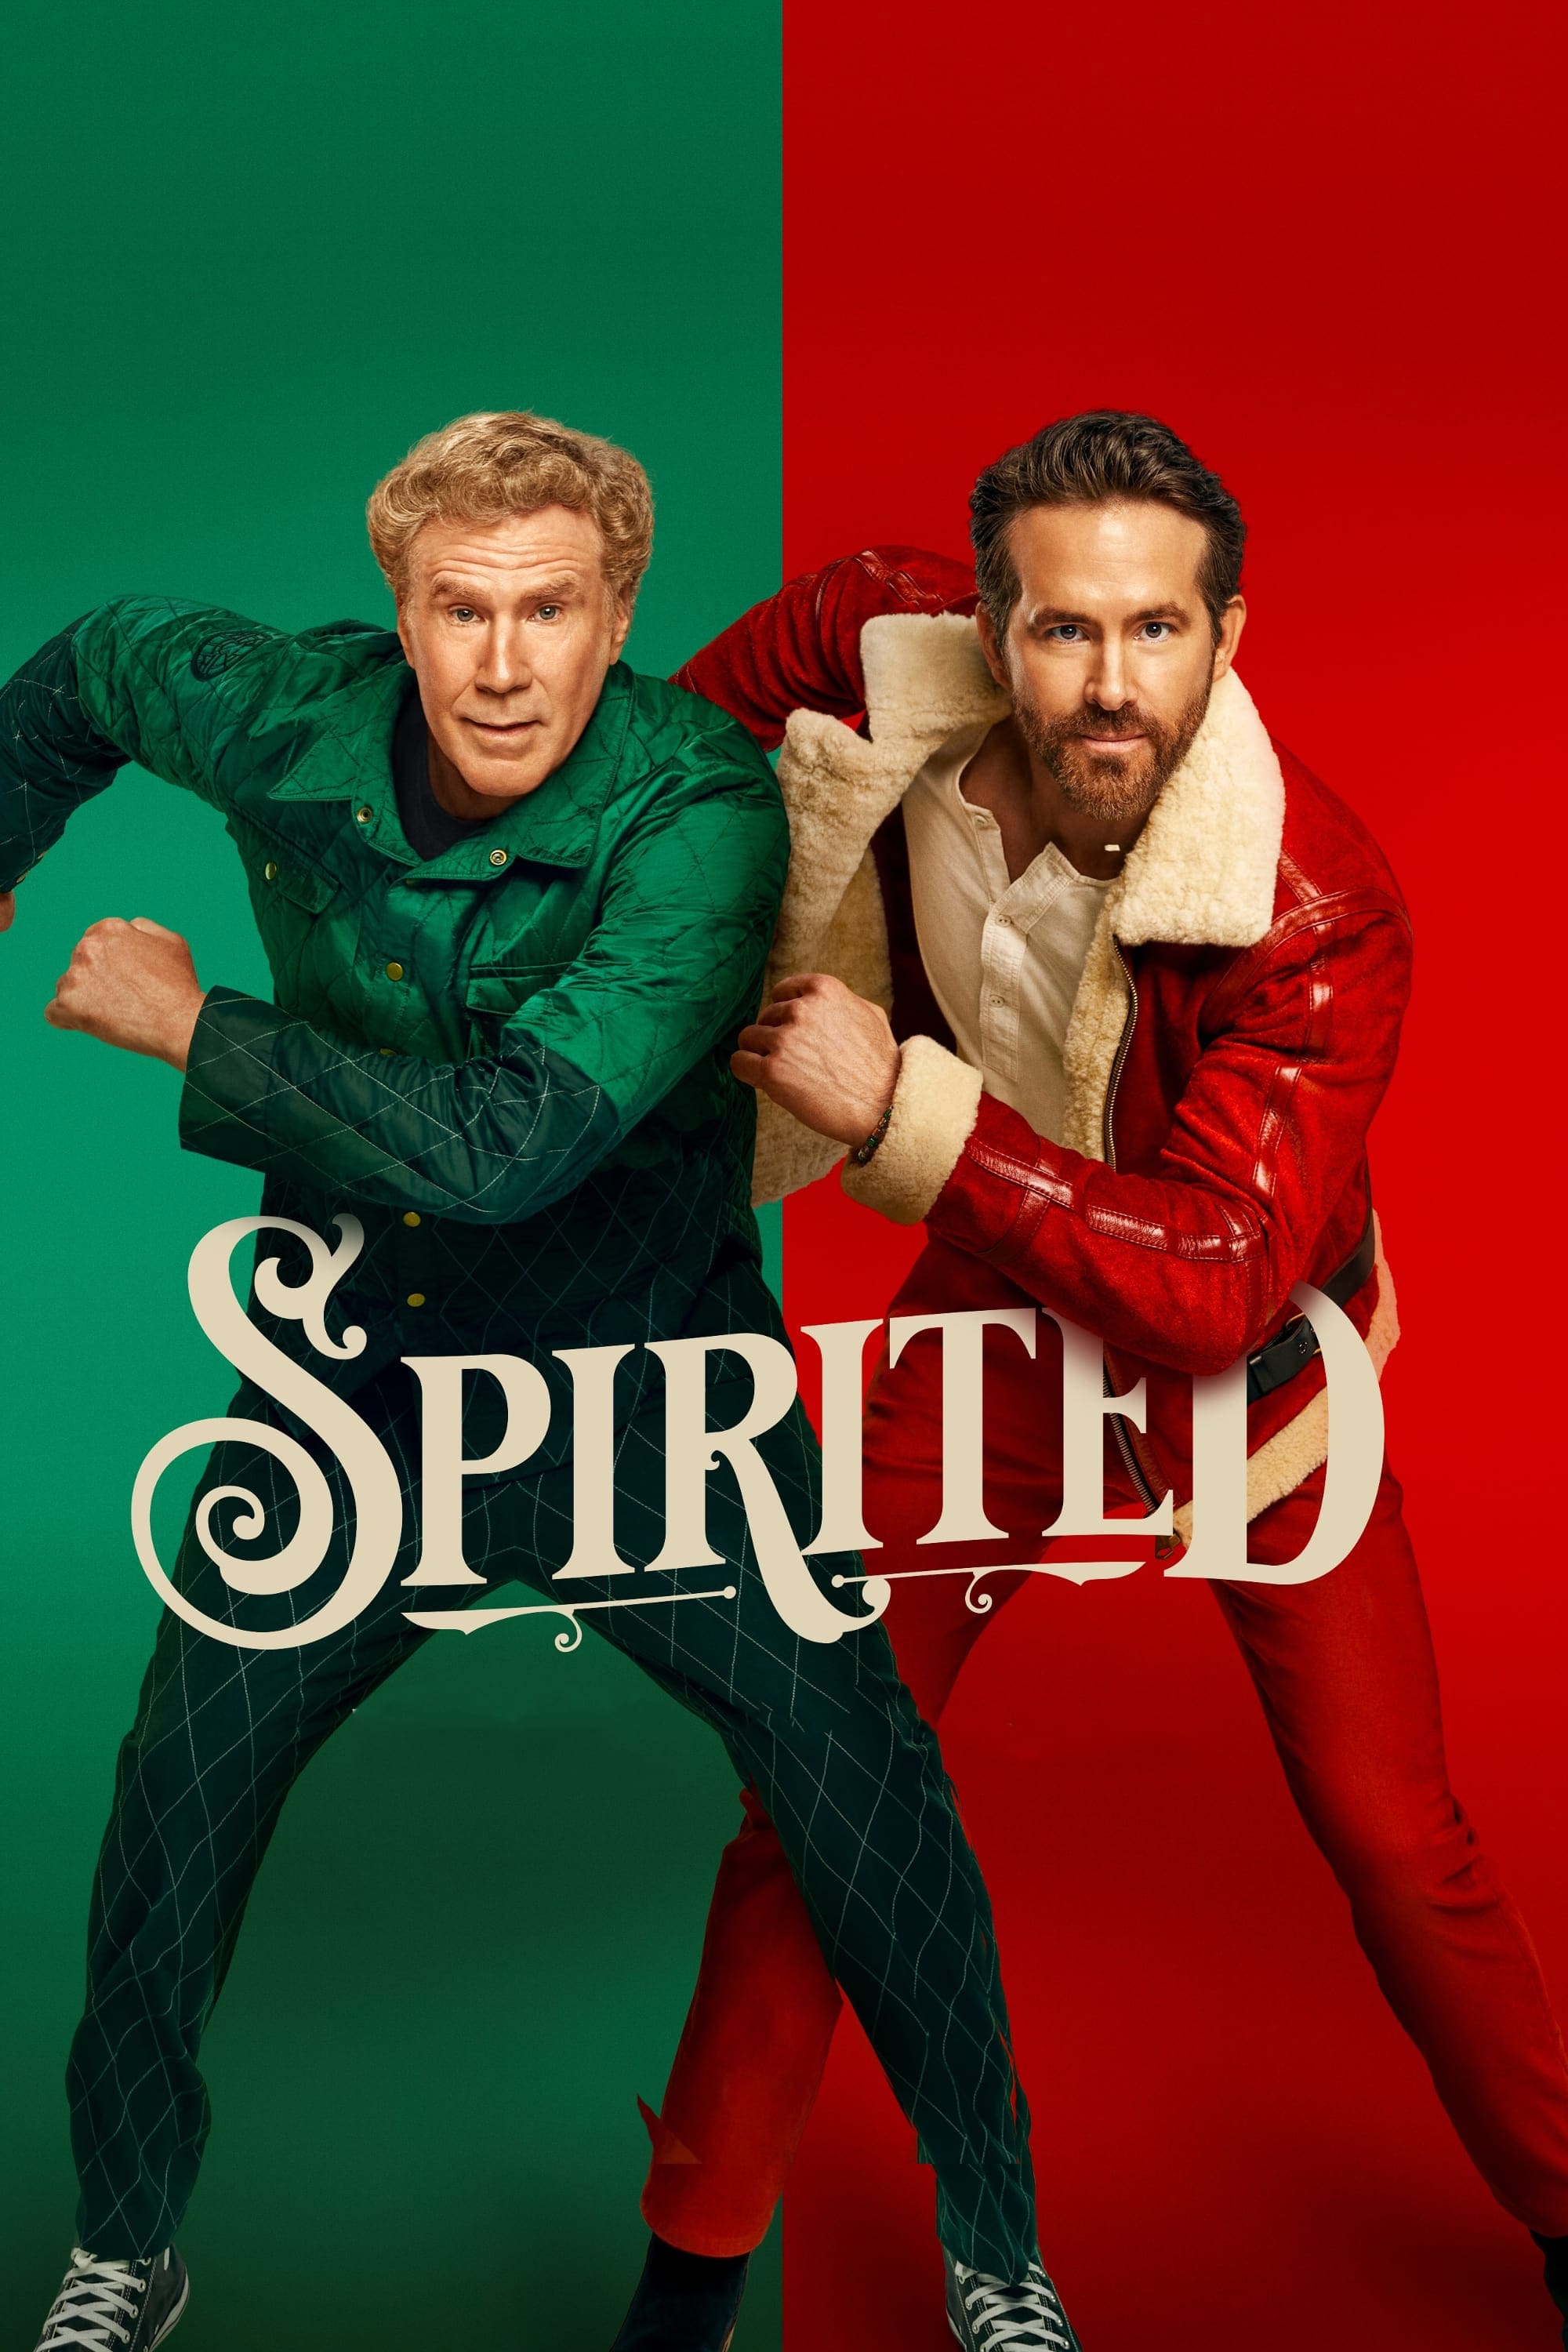 Spirited' review: Will Ferrell, Ryan Reynolds form holiday